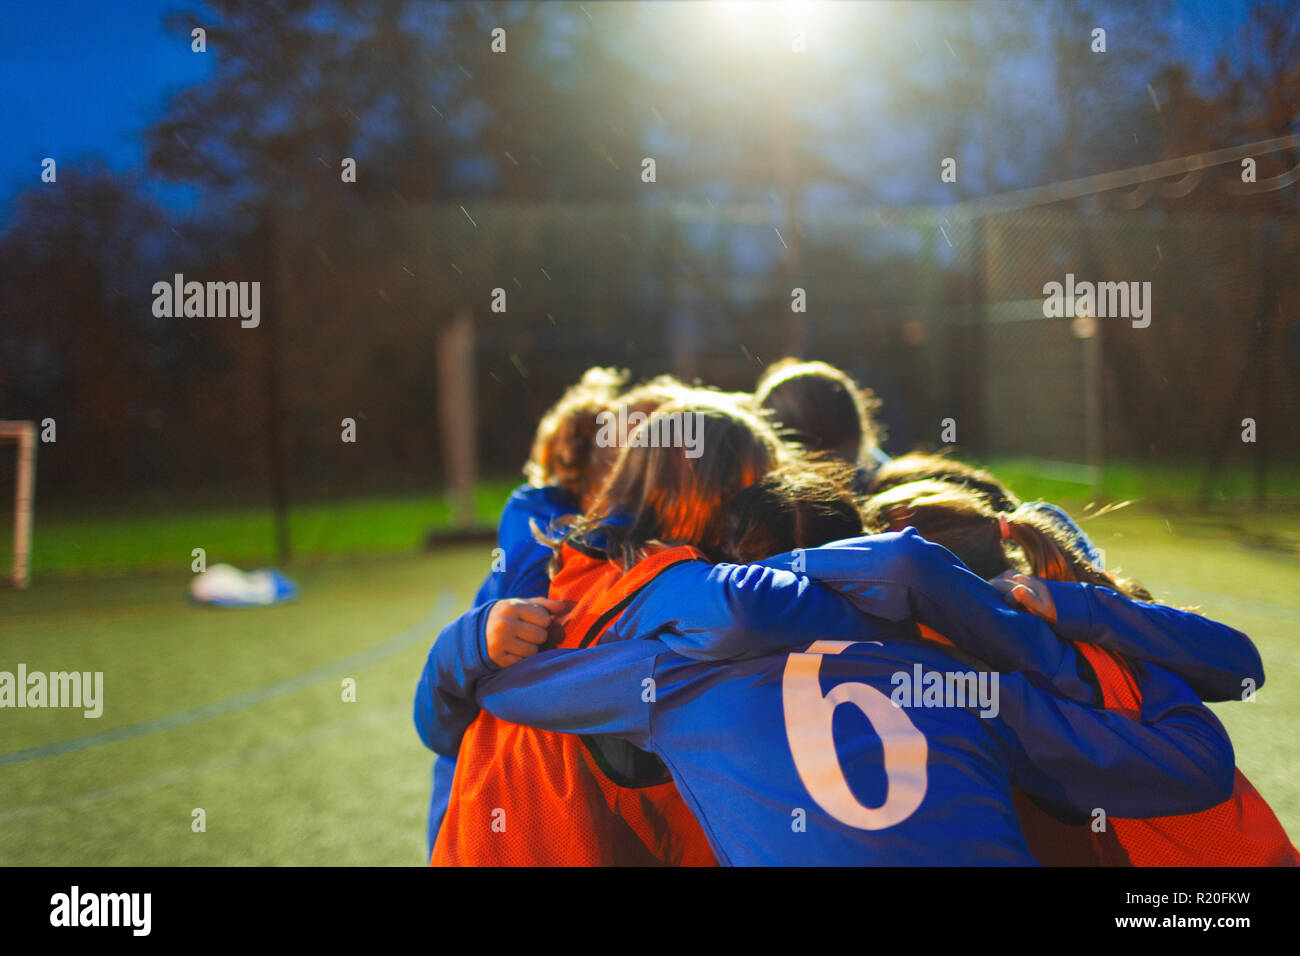 Girls soccer team huddling on field at night Stock Photo